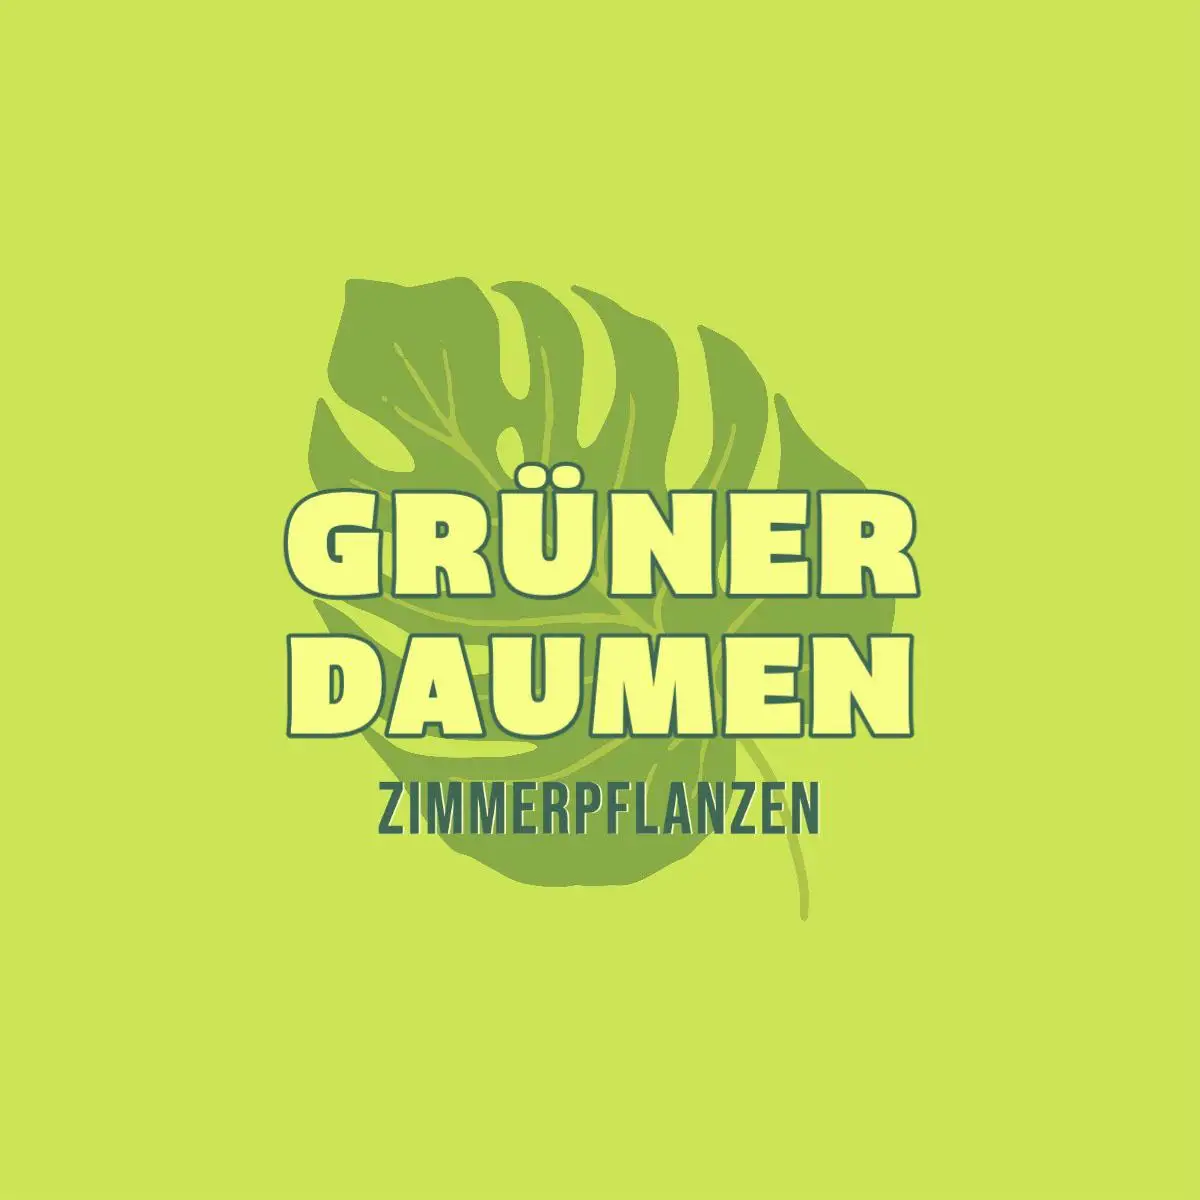 Green illustrated houseplants logo